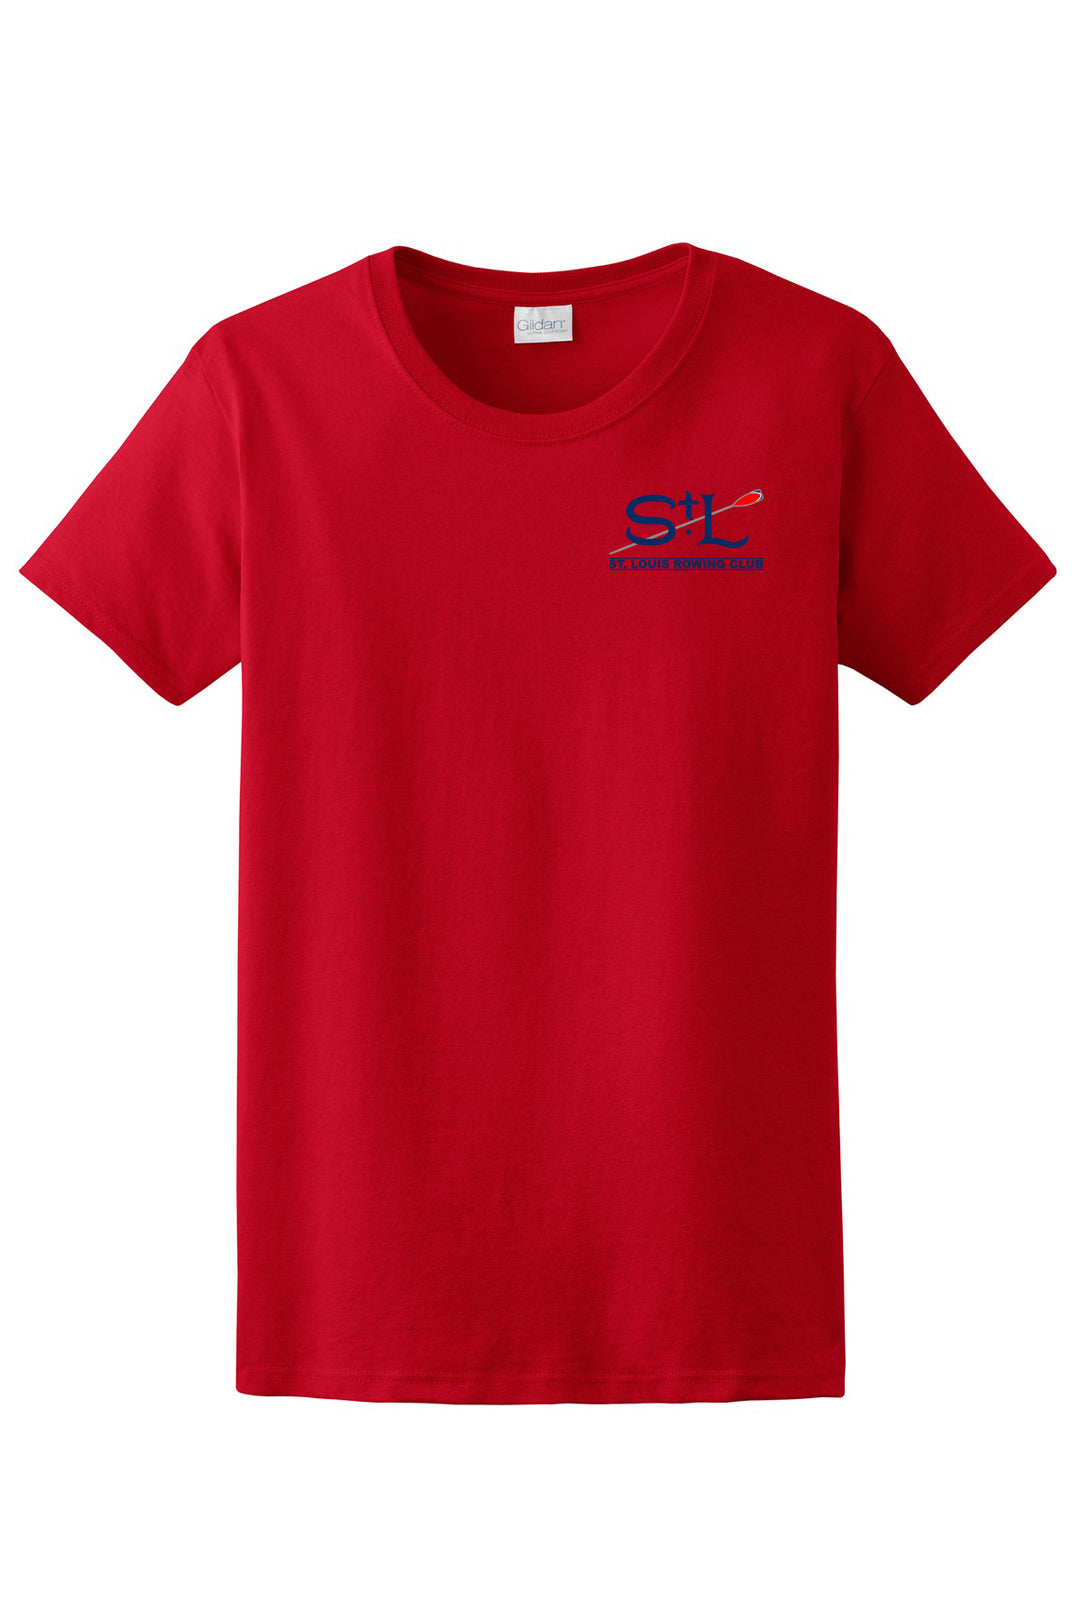 100% Cotton St. Louis Rowing Club Women's Team Spirit T-Shirt